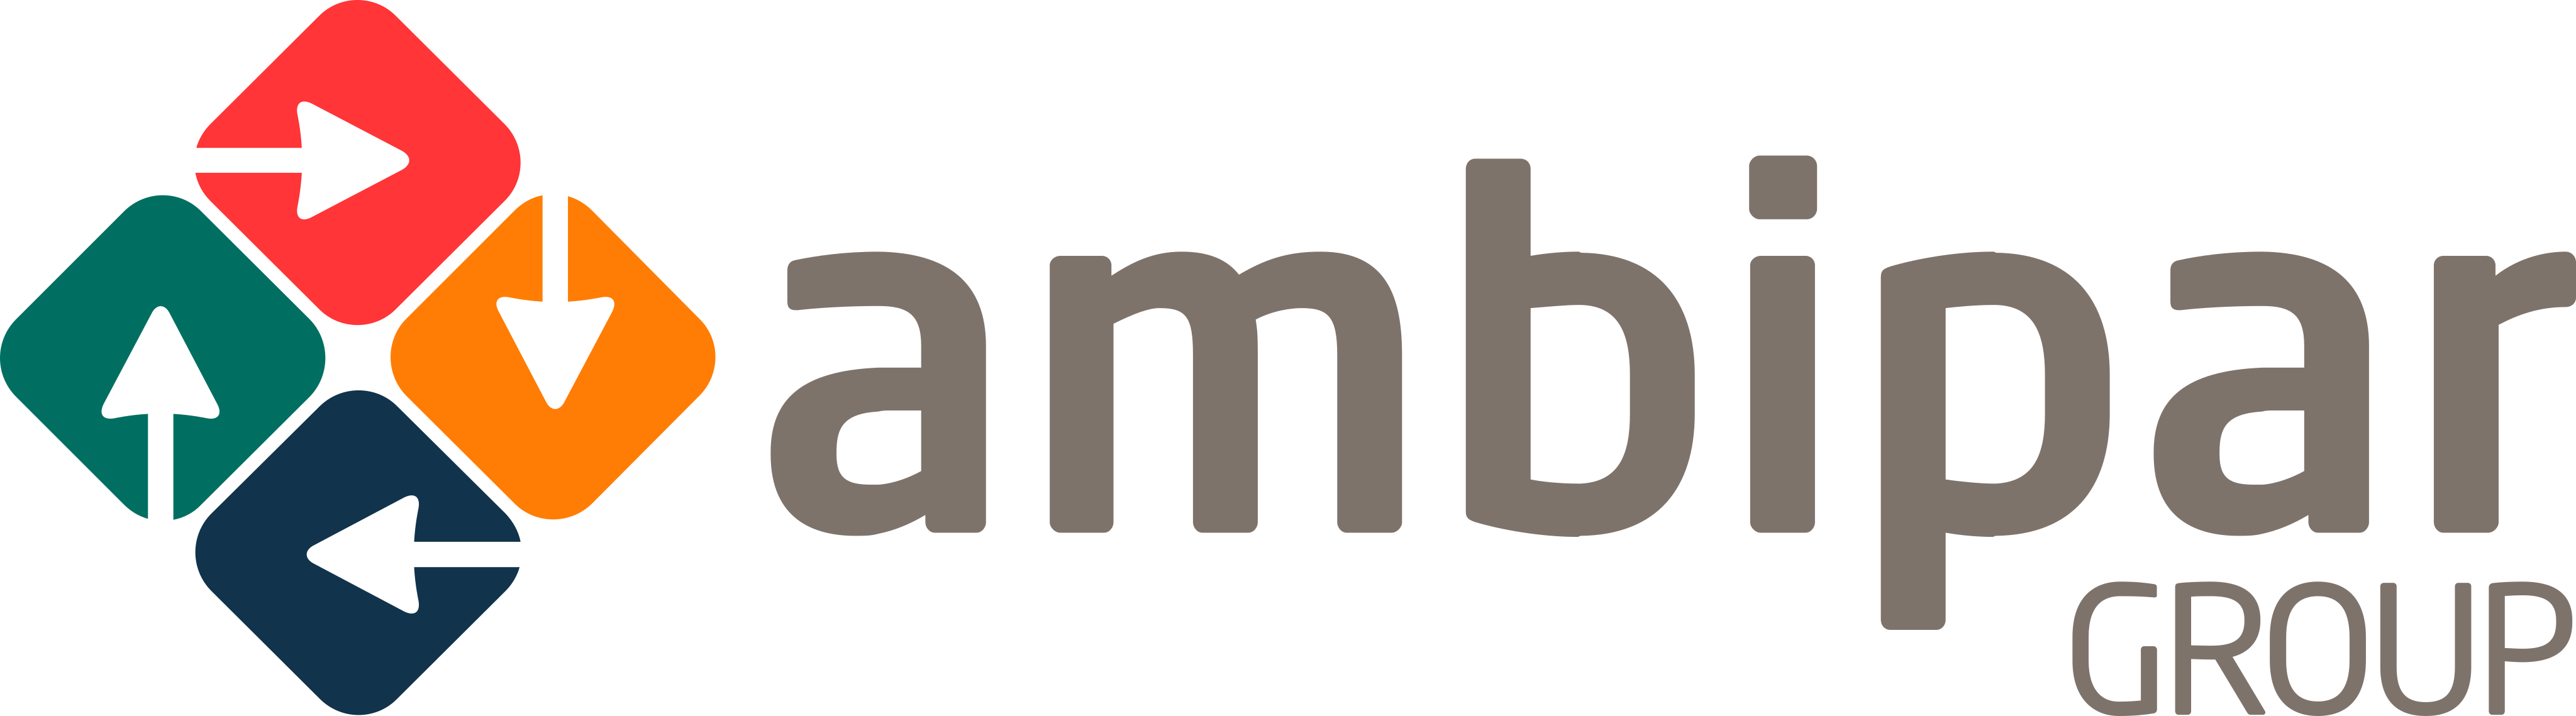 ambipar logo